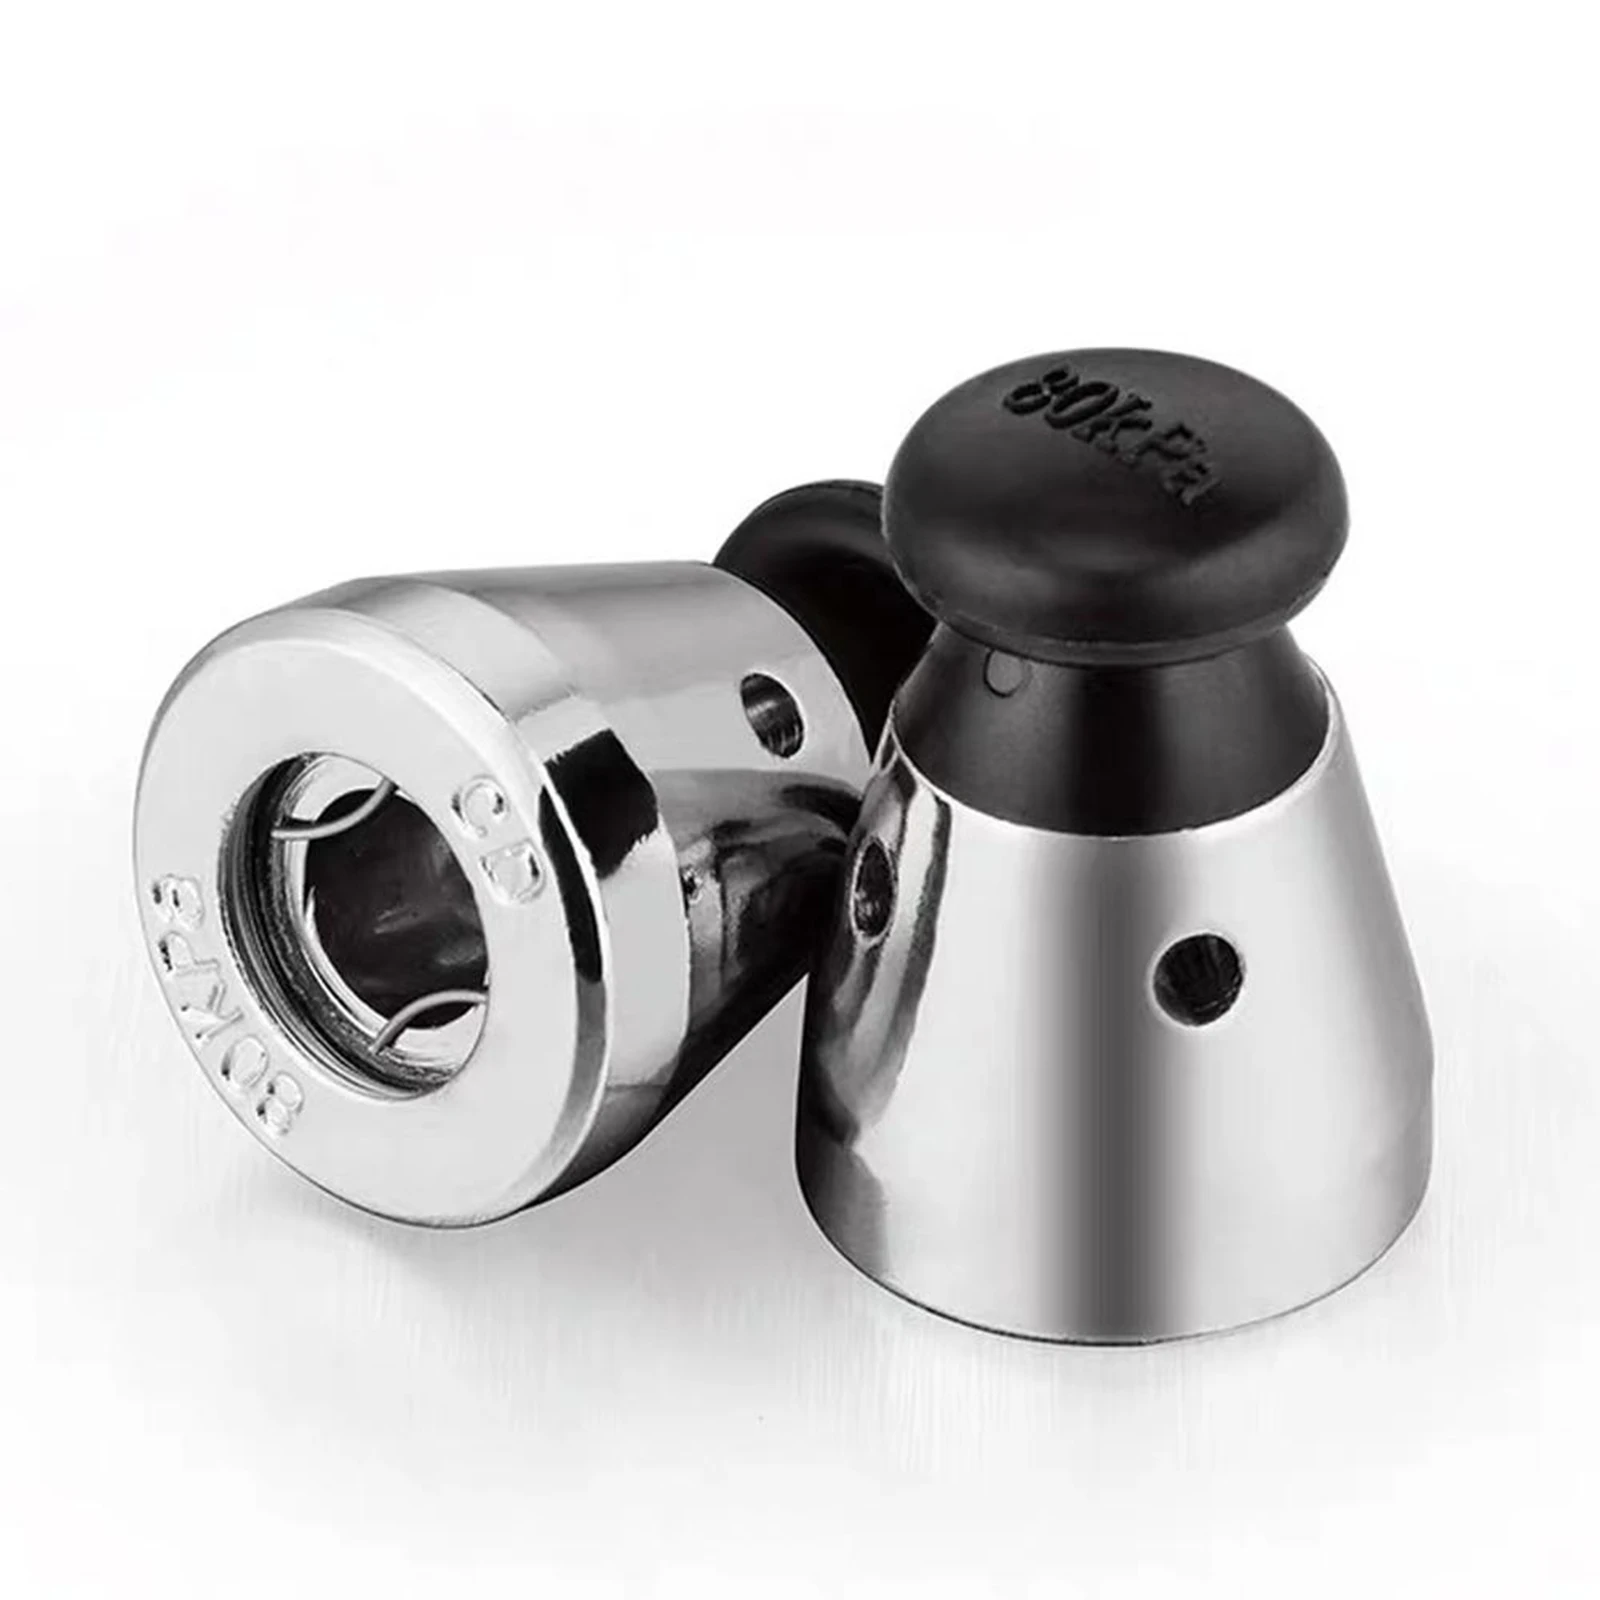 Ventil kuhinjski lonac Univerzalni ventil za ispuštanje pare Pribor za ekspres lonac domaće kuhinje i restorana